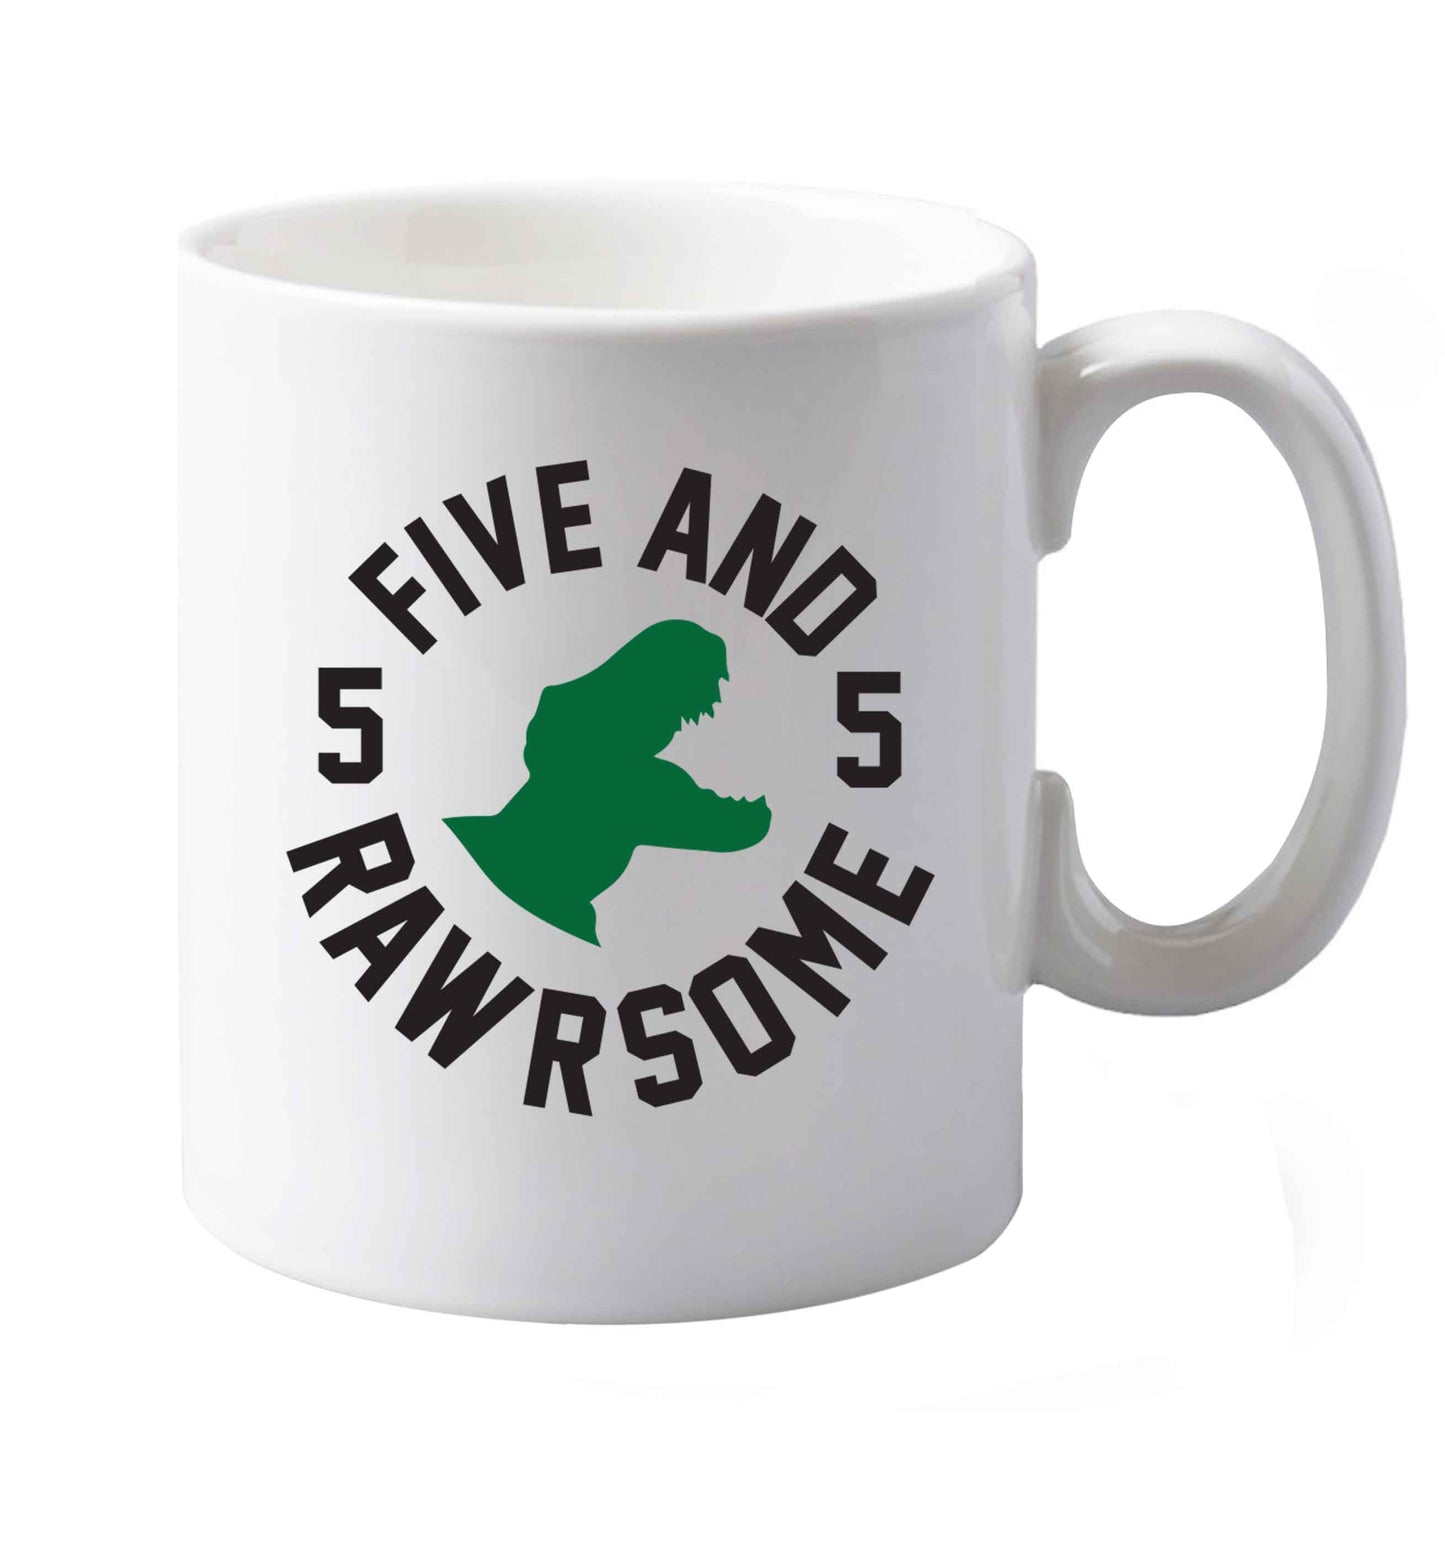 10 oz Five and rawrsome ceramic mug both sides